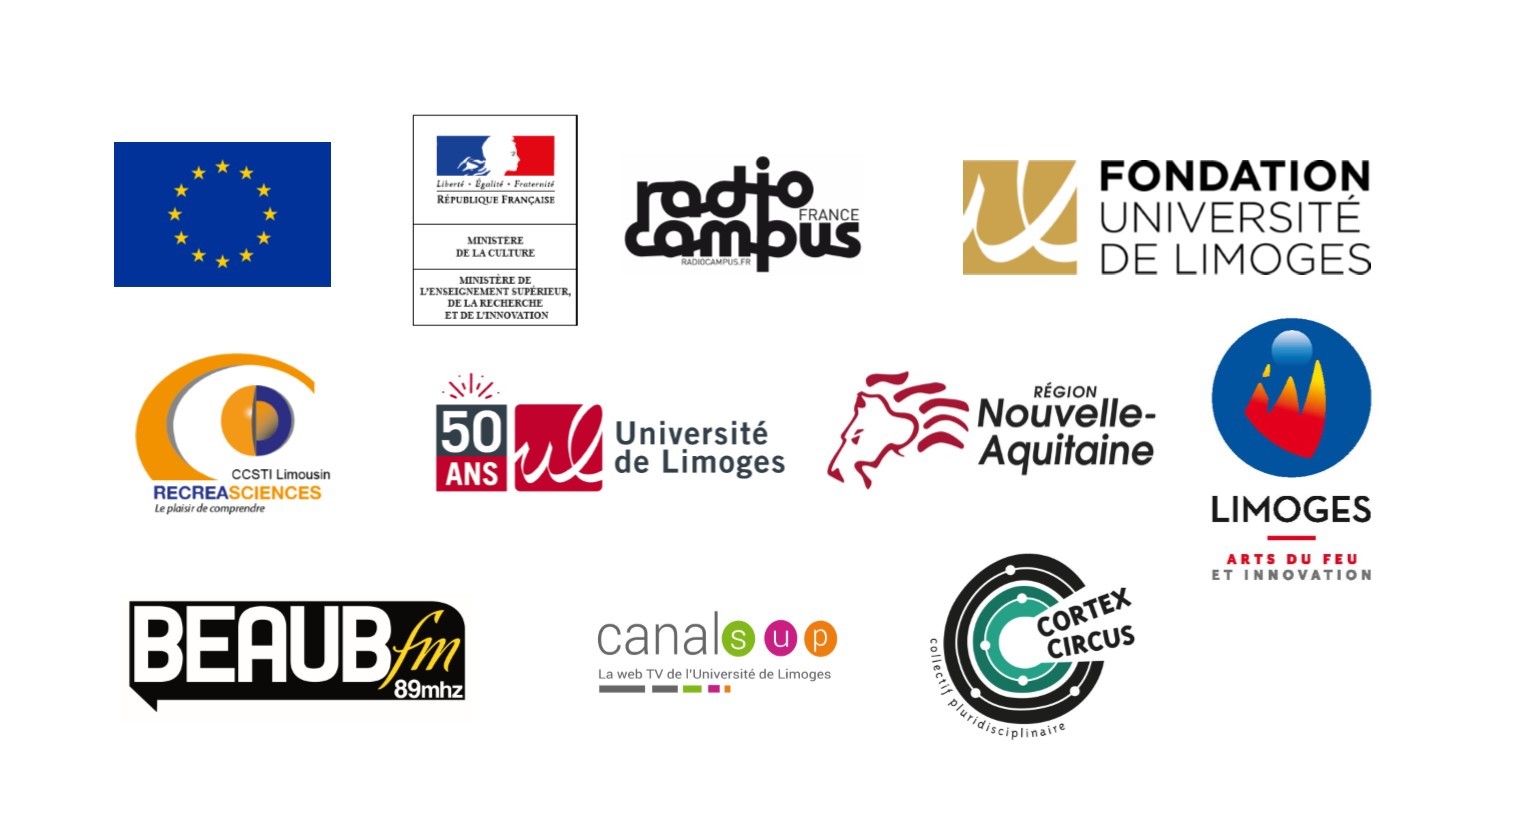 https://fondation.unilim.fr/fondation/wp-content/uploads/sites/2/2018/07/Composition-logos-2.jpg